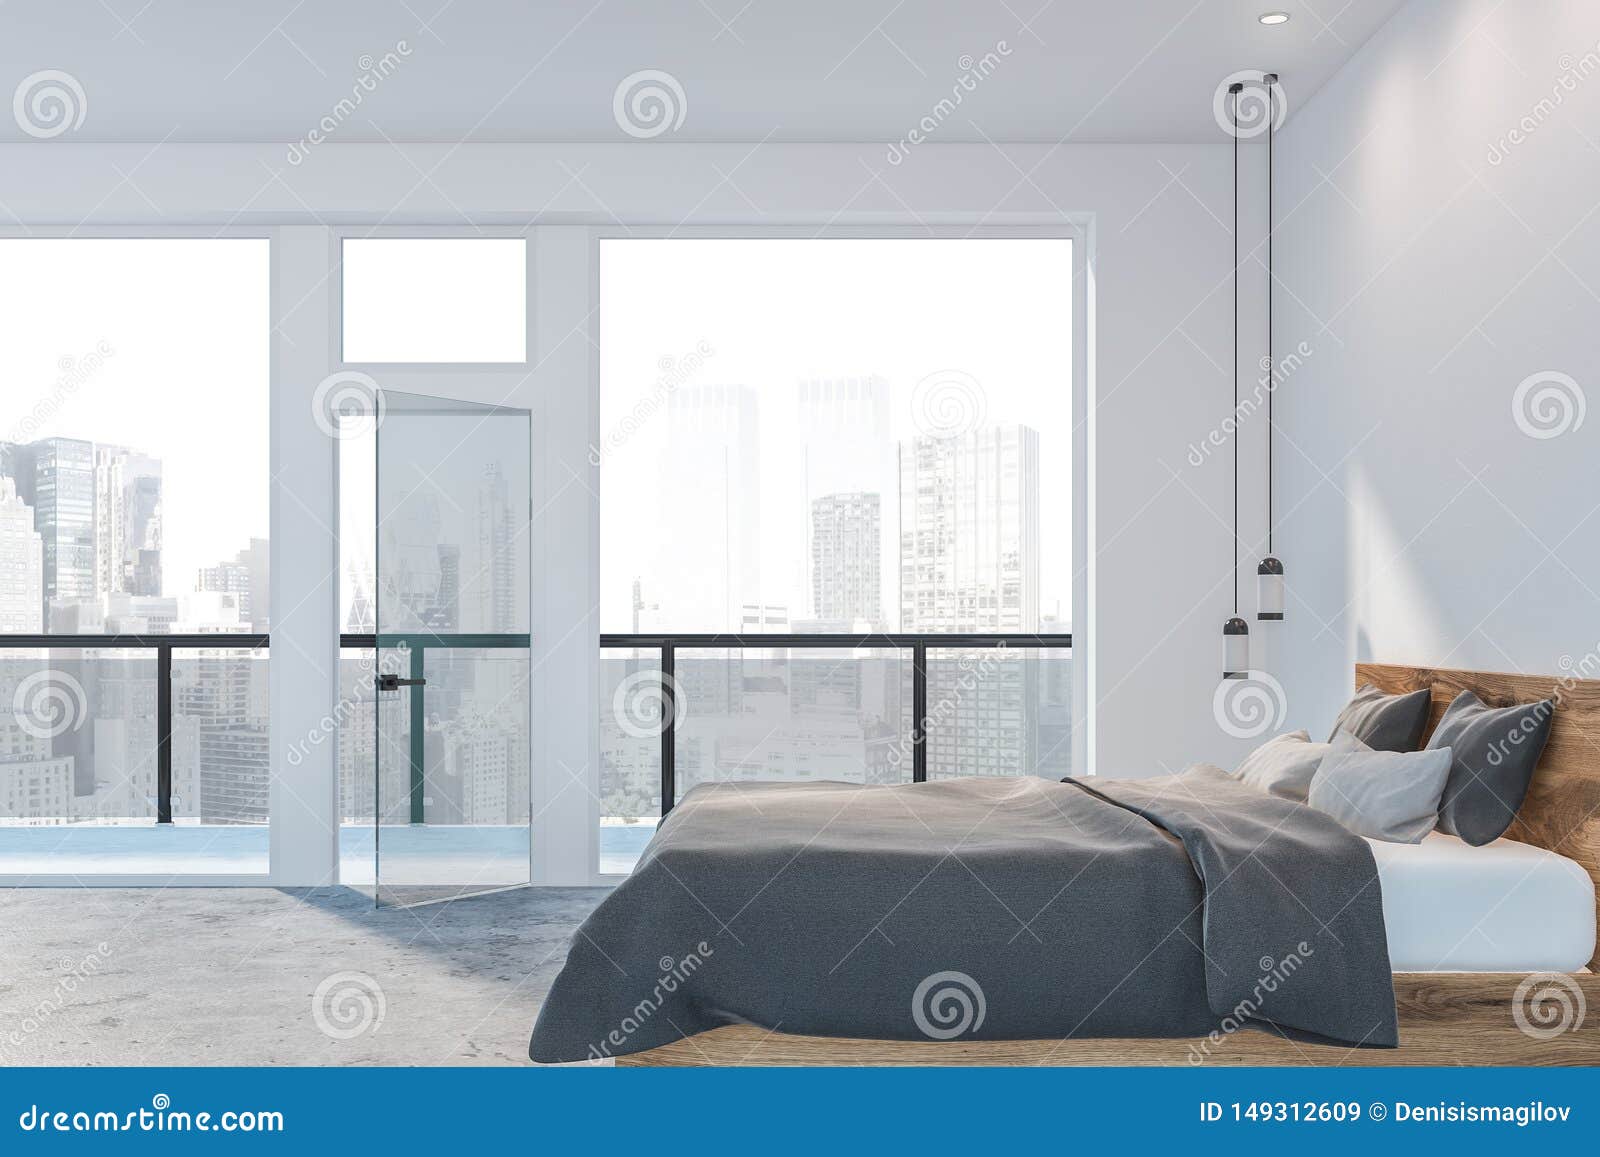 White Bedroom Interior With Balcony Stock Illustration